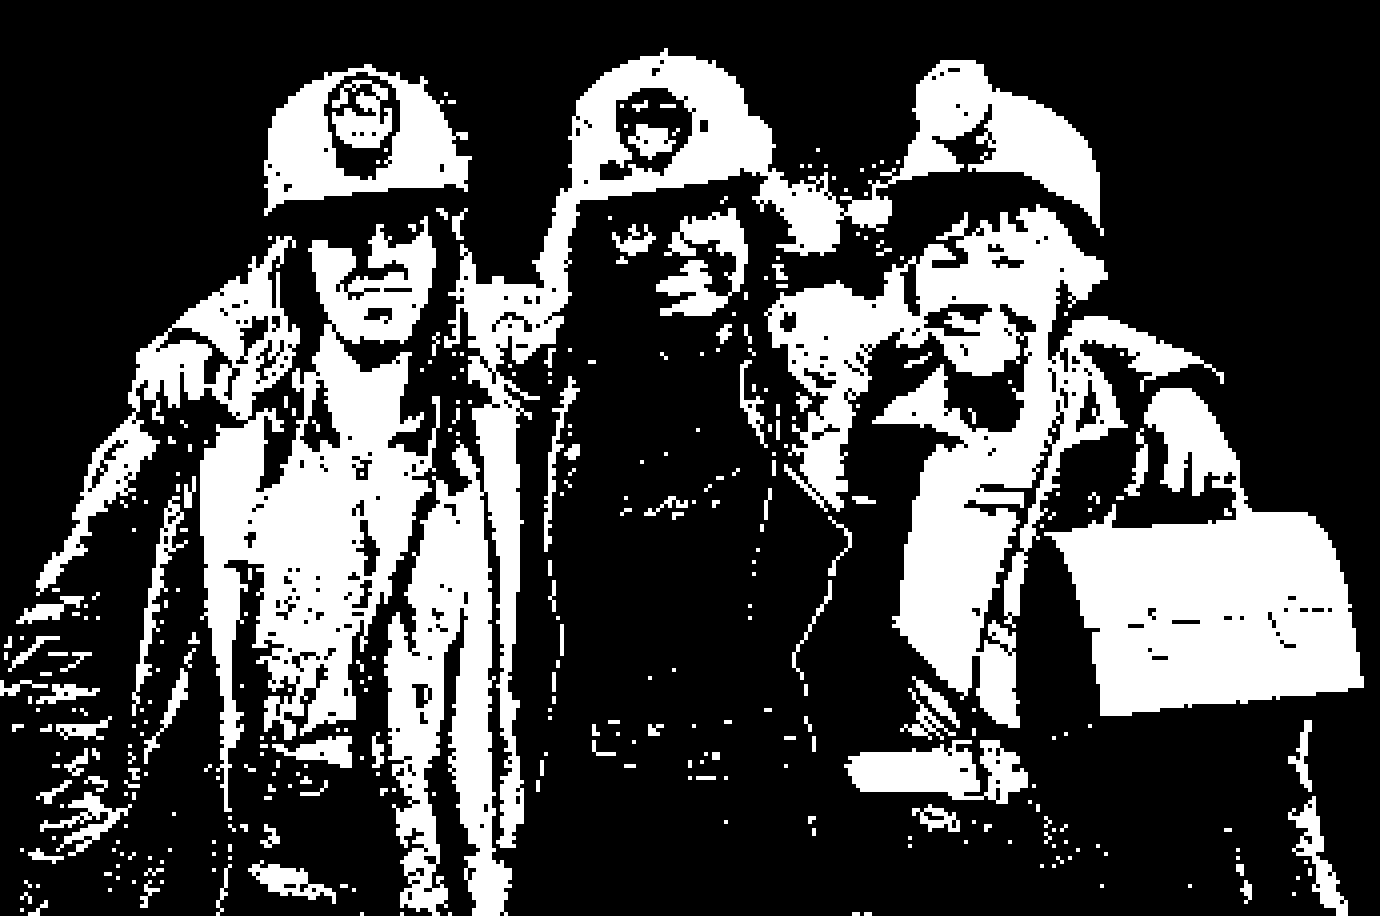 Three miner women